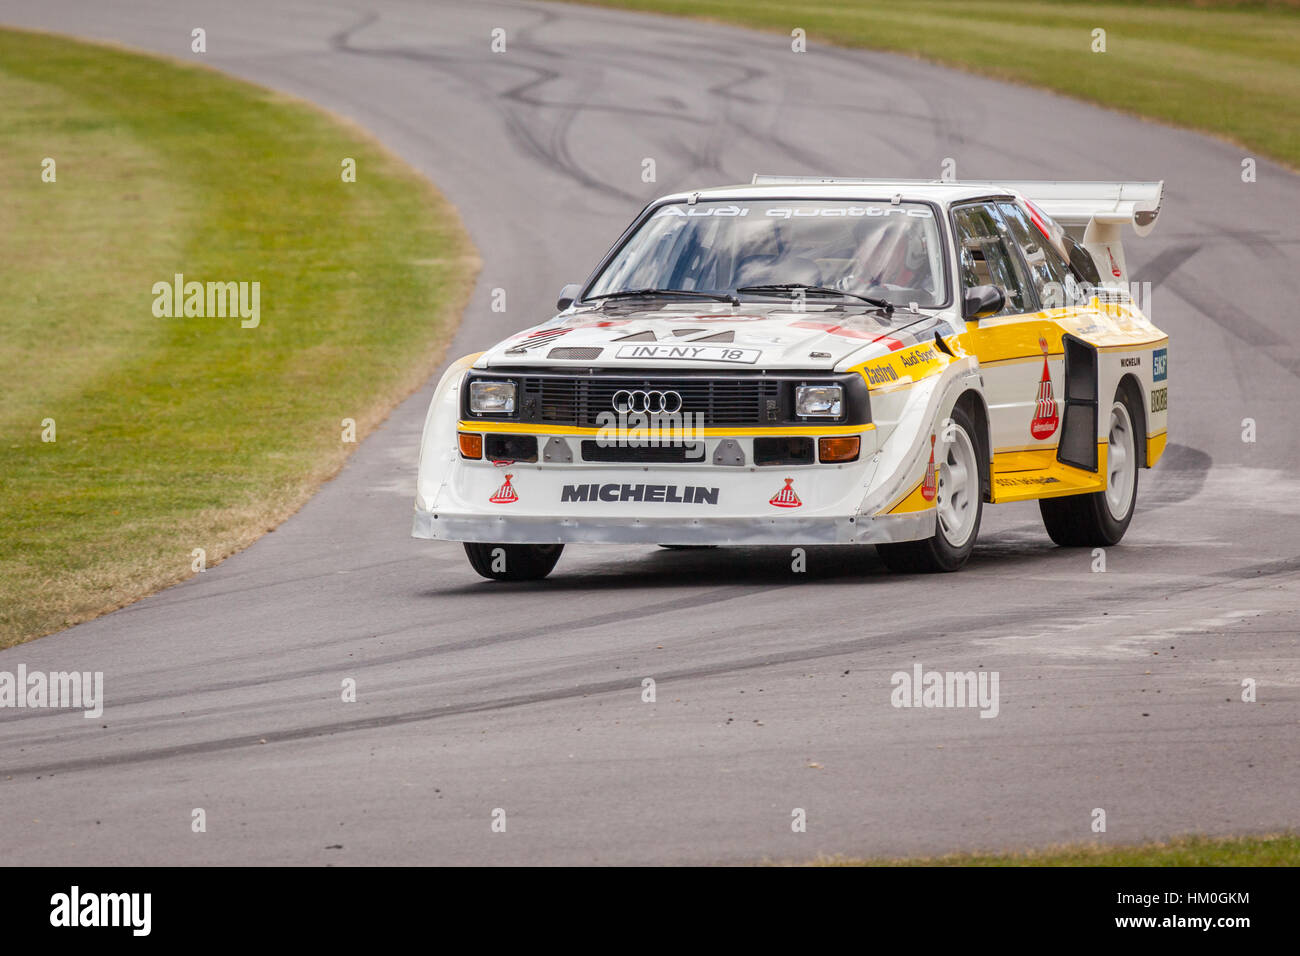 Audi Quattro racing car at Goodwood Festival of Speed 2014 Stock Photo